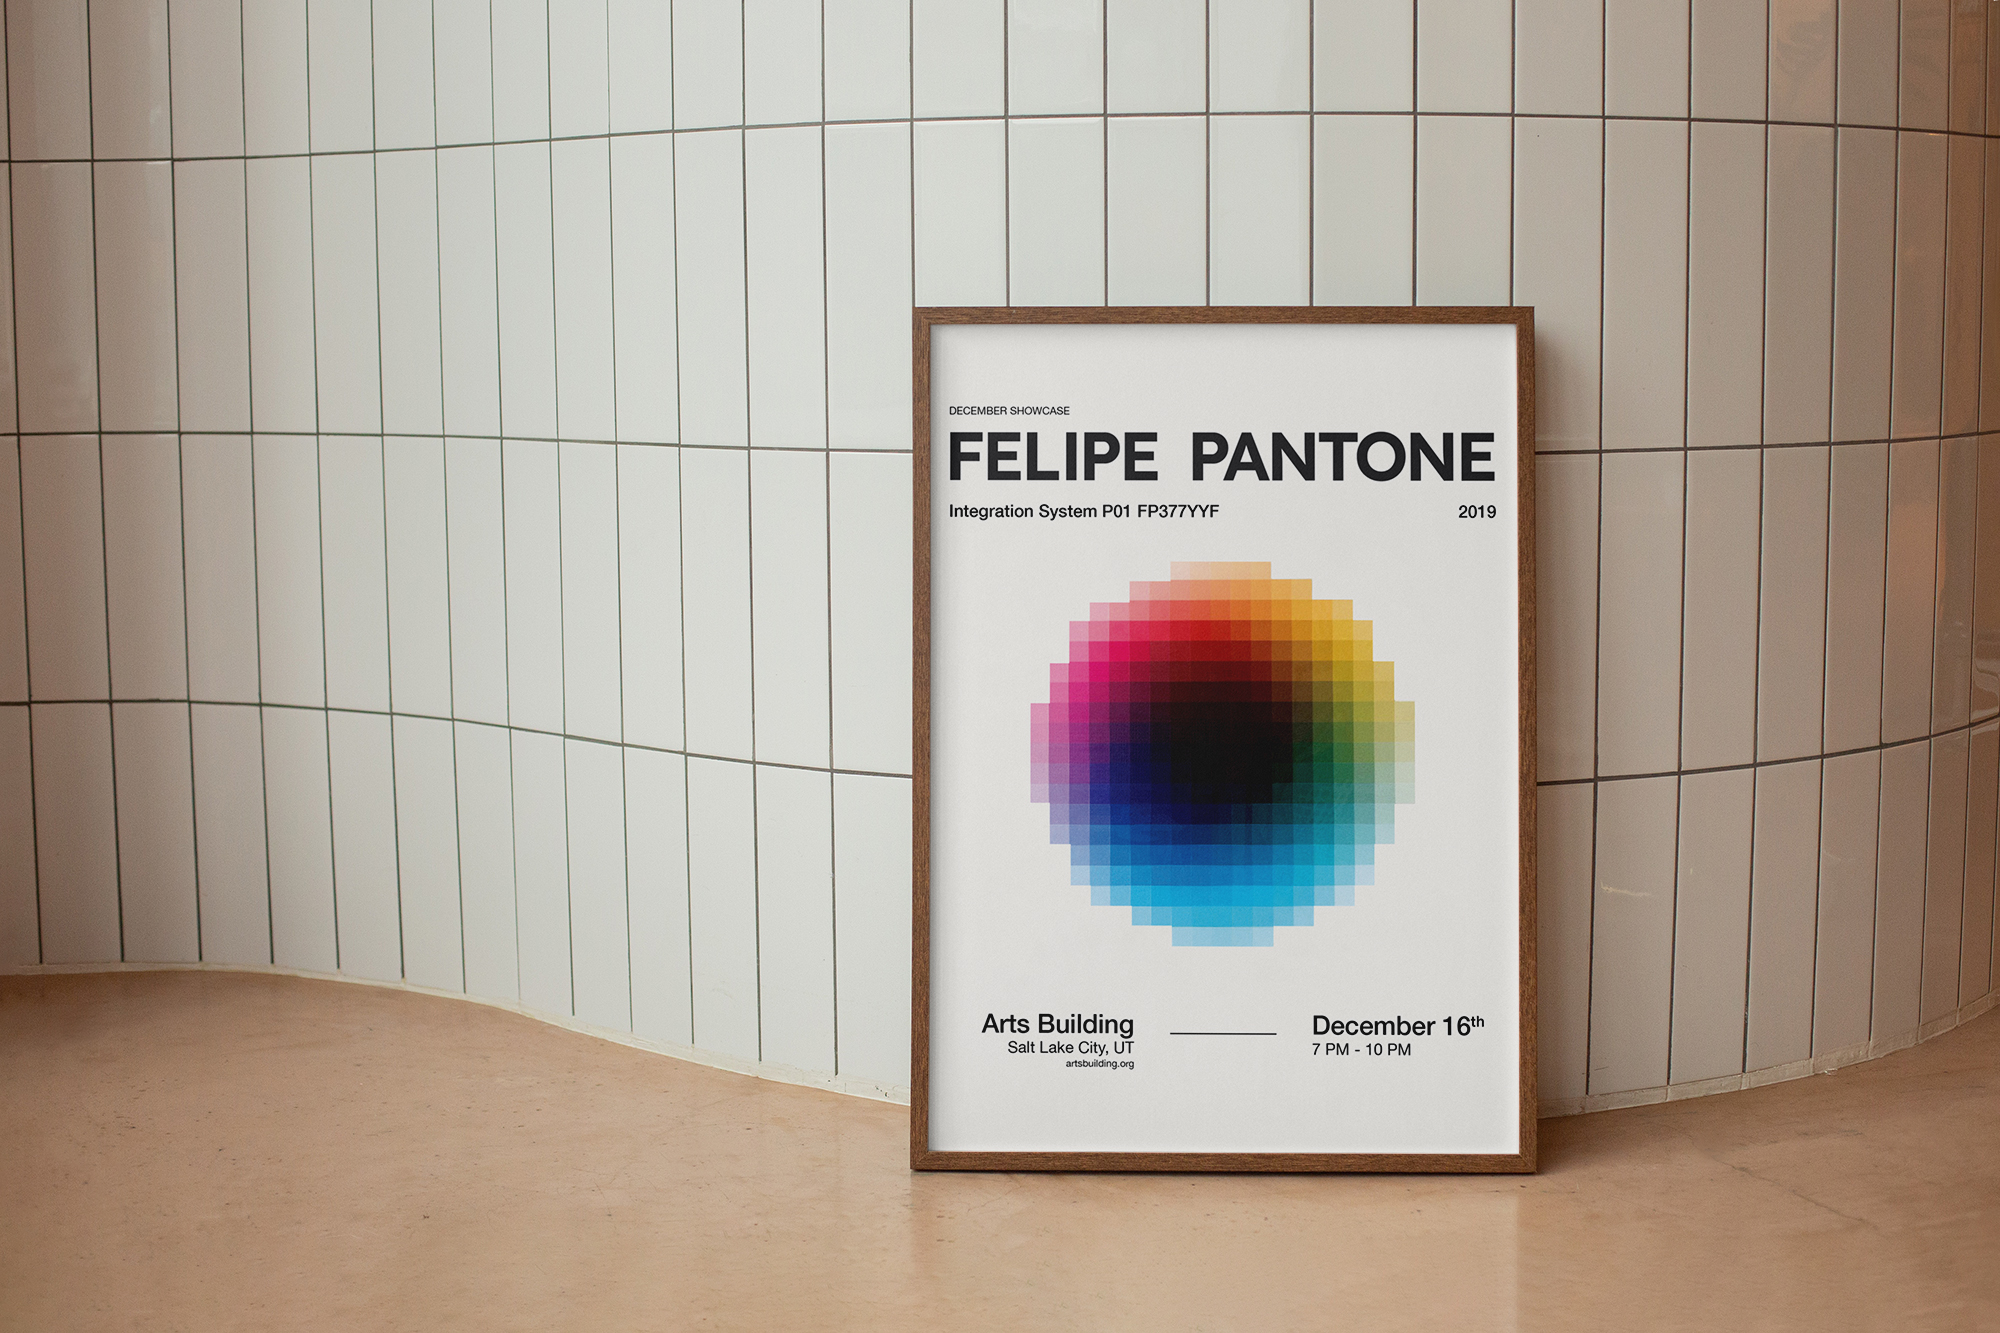 Felipe Pantone Artist Showcase Poster by Jackson Alvey on Dribbble